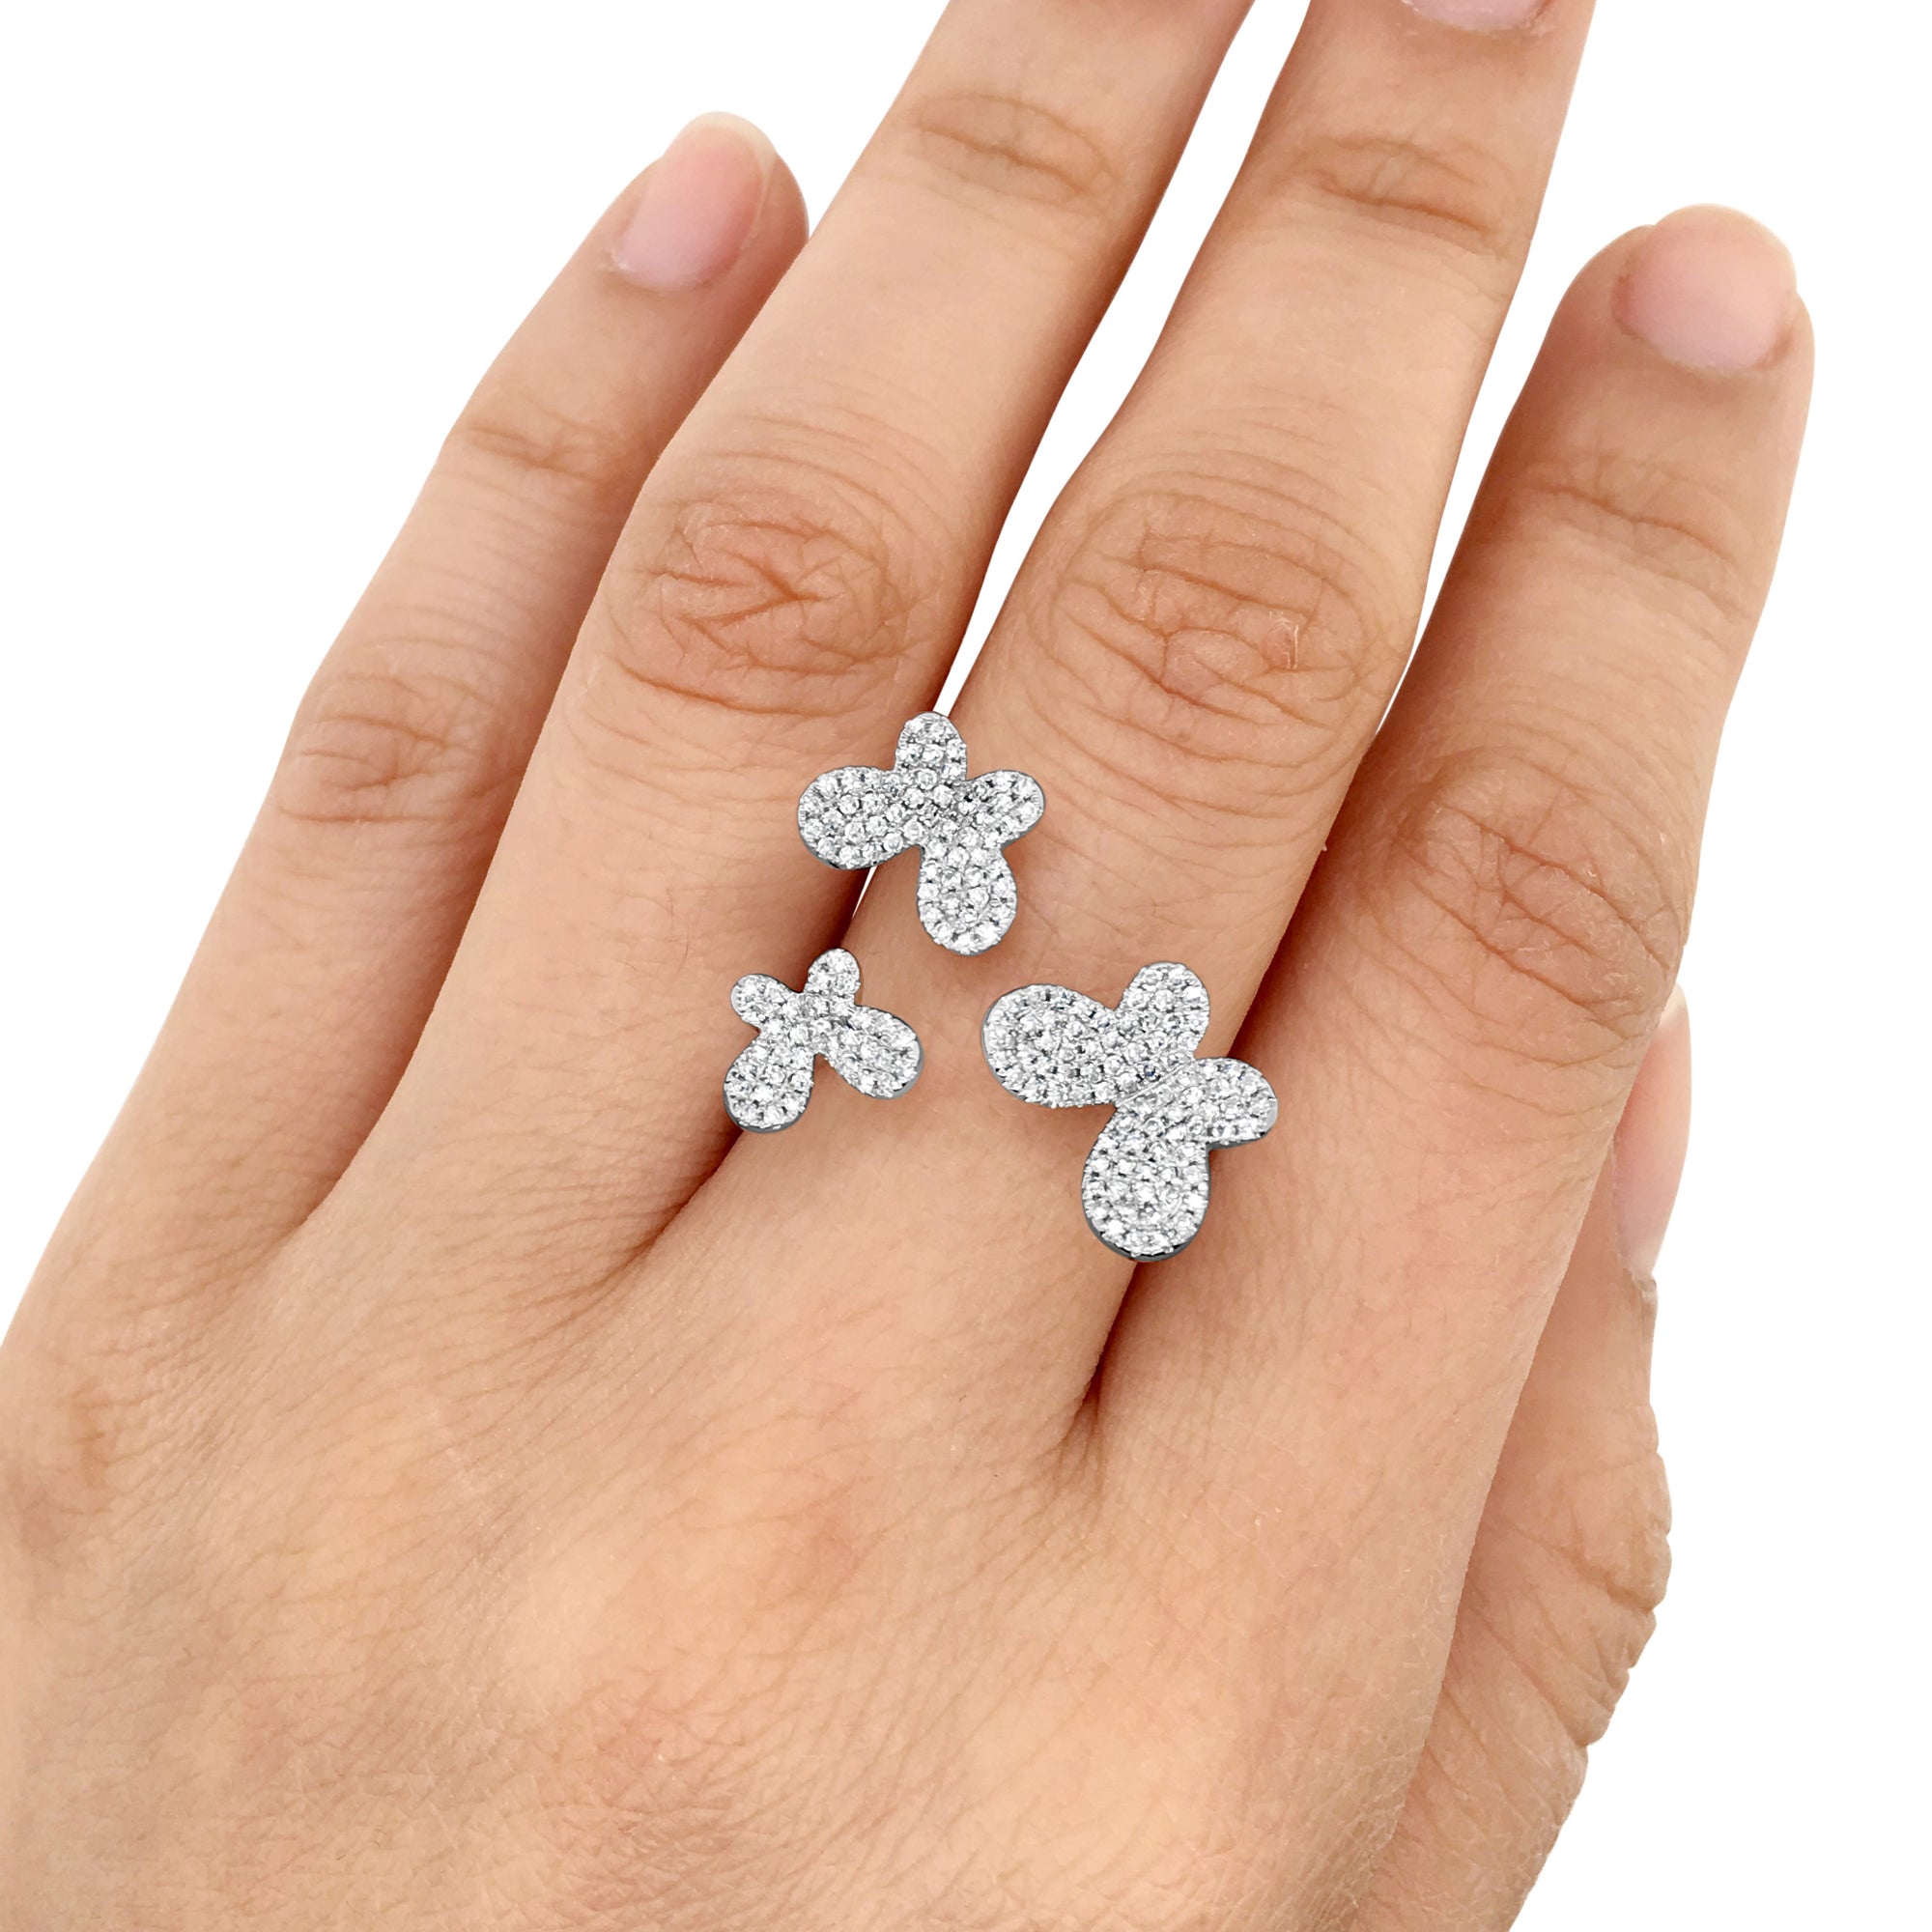 Triple-Butterfly Diamond Ring  -14k gold weighing 4.96 grams  -168 round diamonds weighing .43 carat